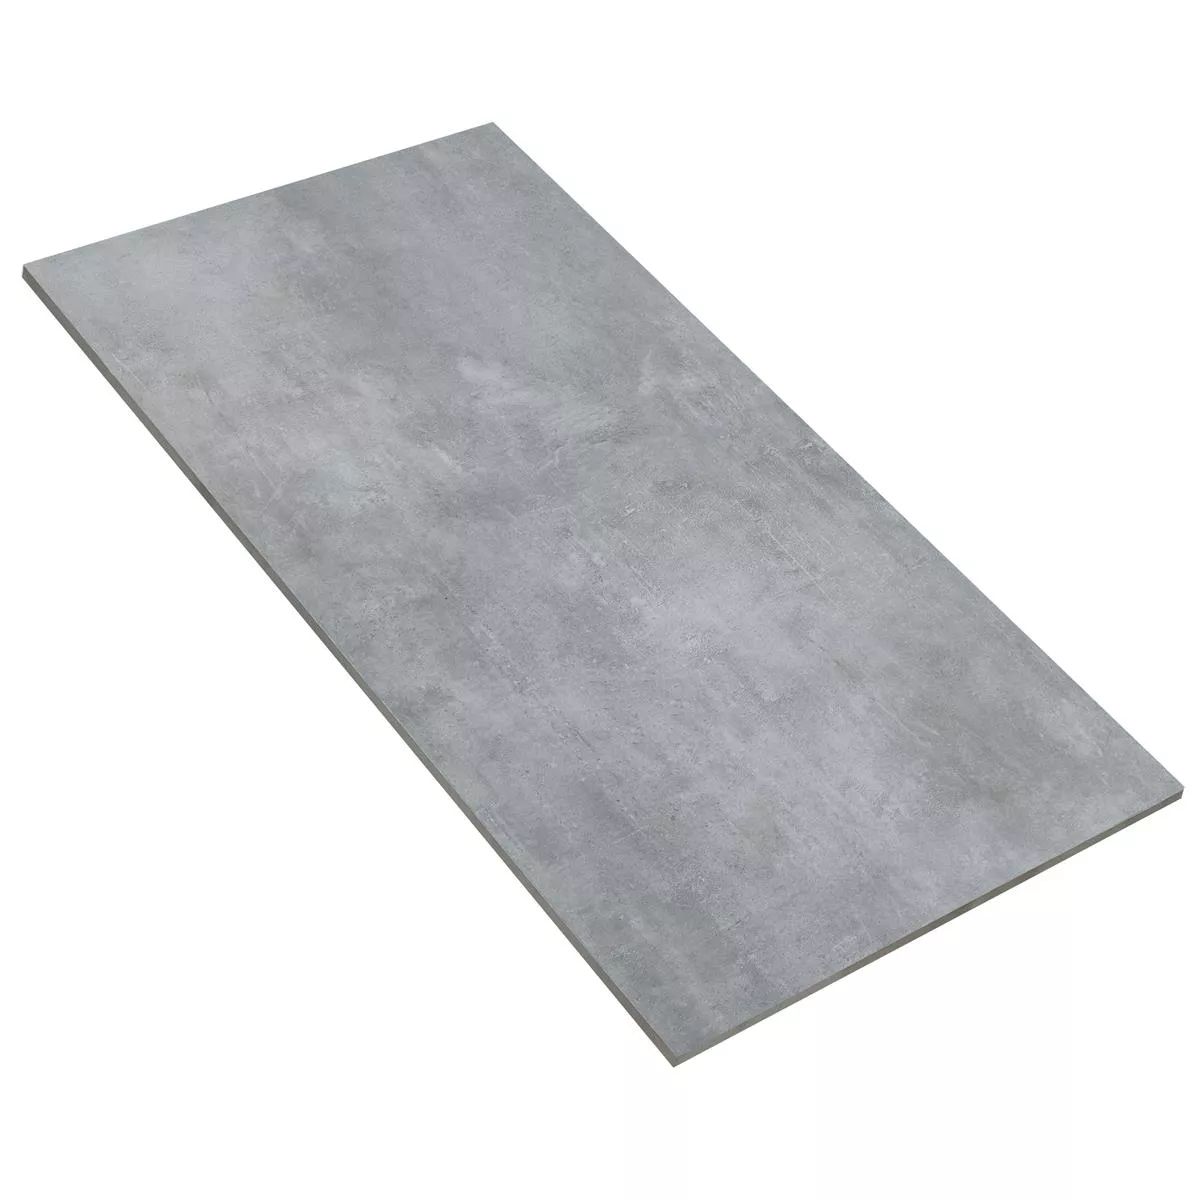 Sample Floor Tiles Assos Beton Optic R10/B Grey 30x60cm